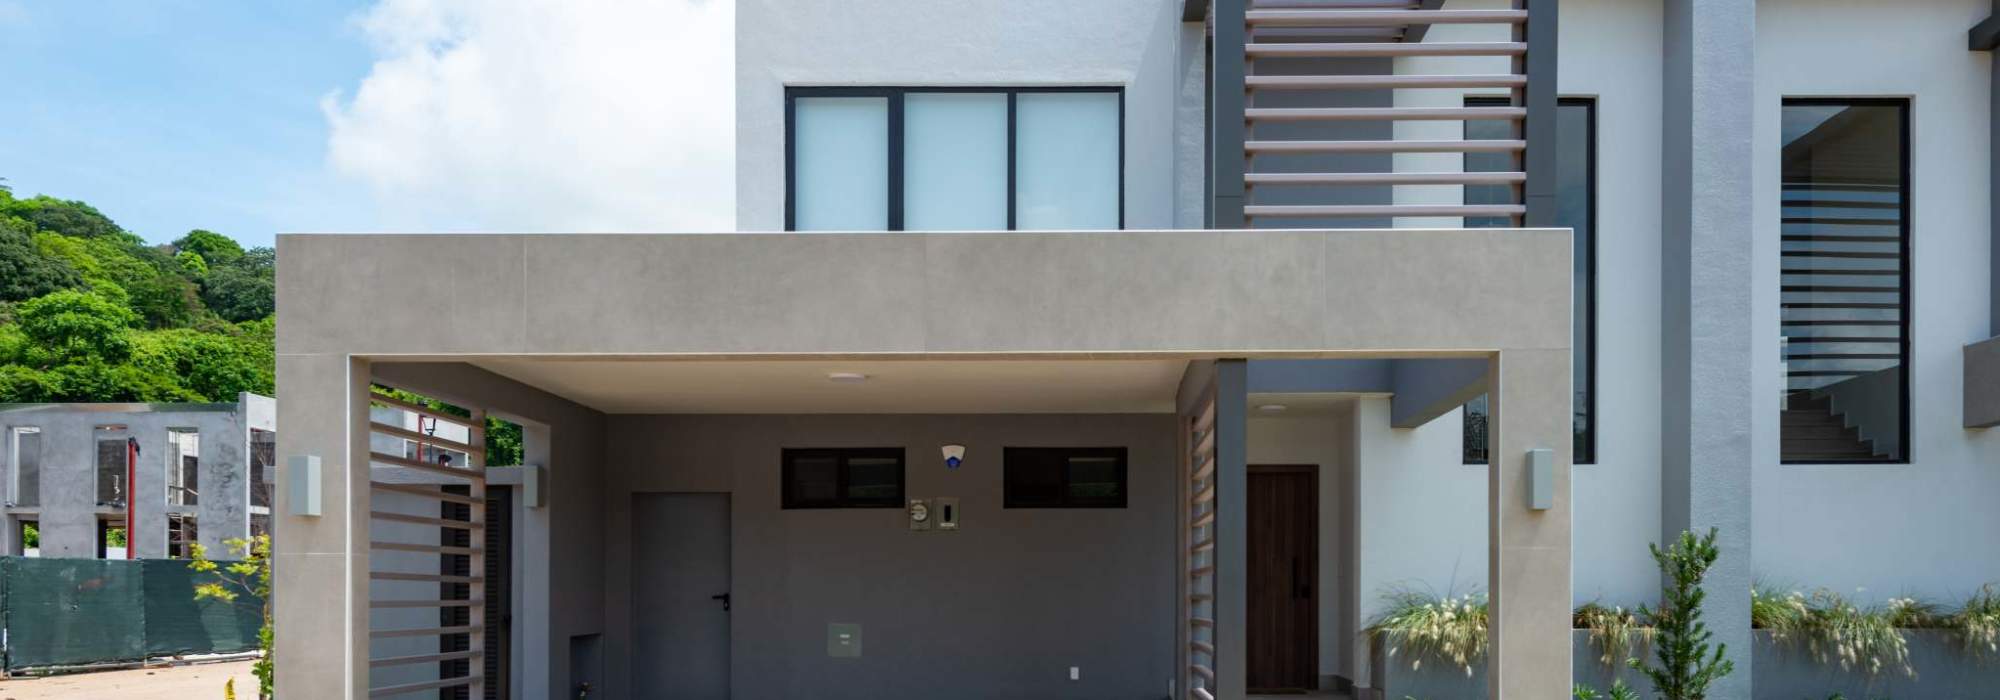 Venta de casas en Panamá Pacífico | ENTREGA INMEDIATA